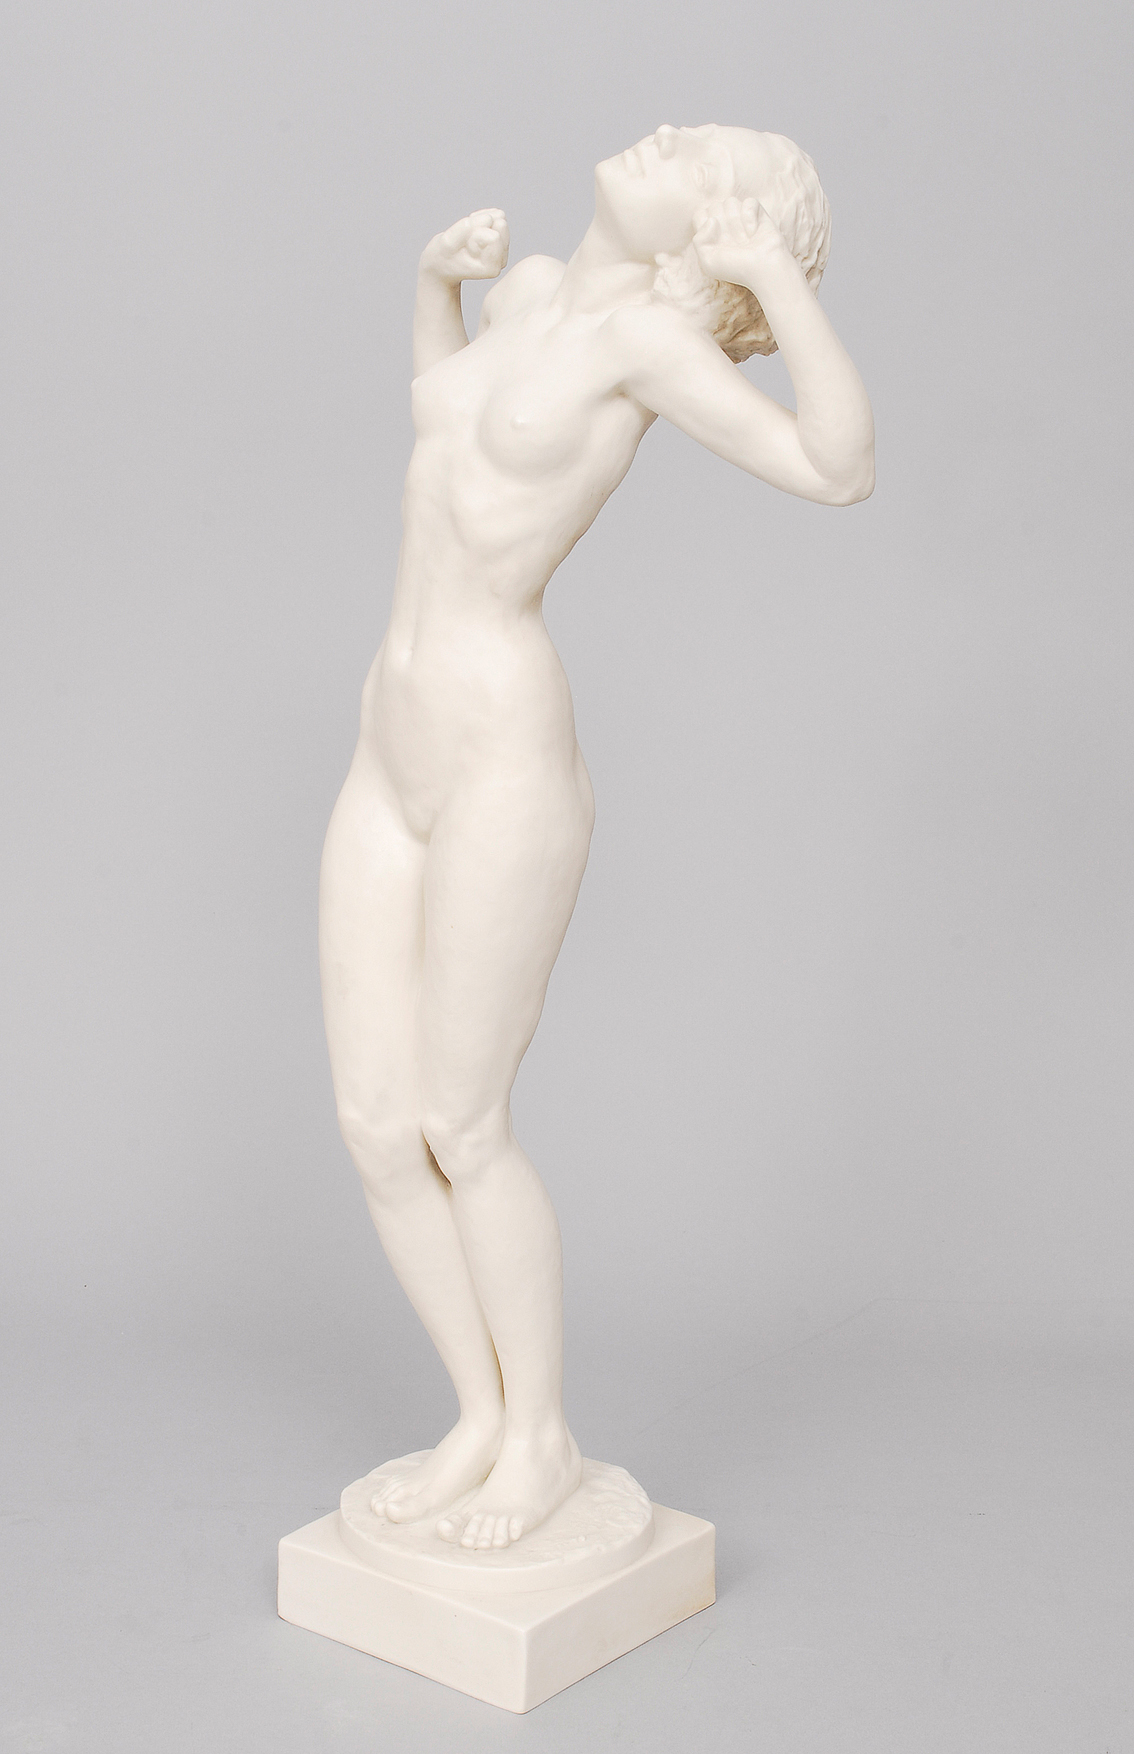 A large figure of a female nude